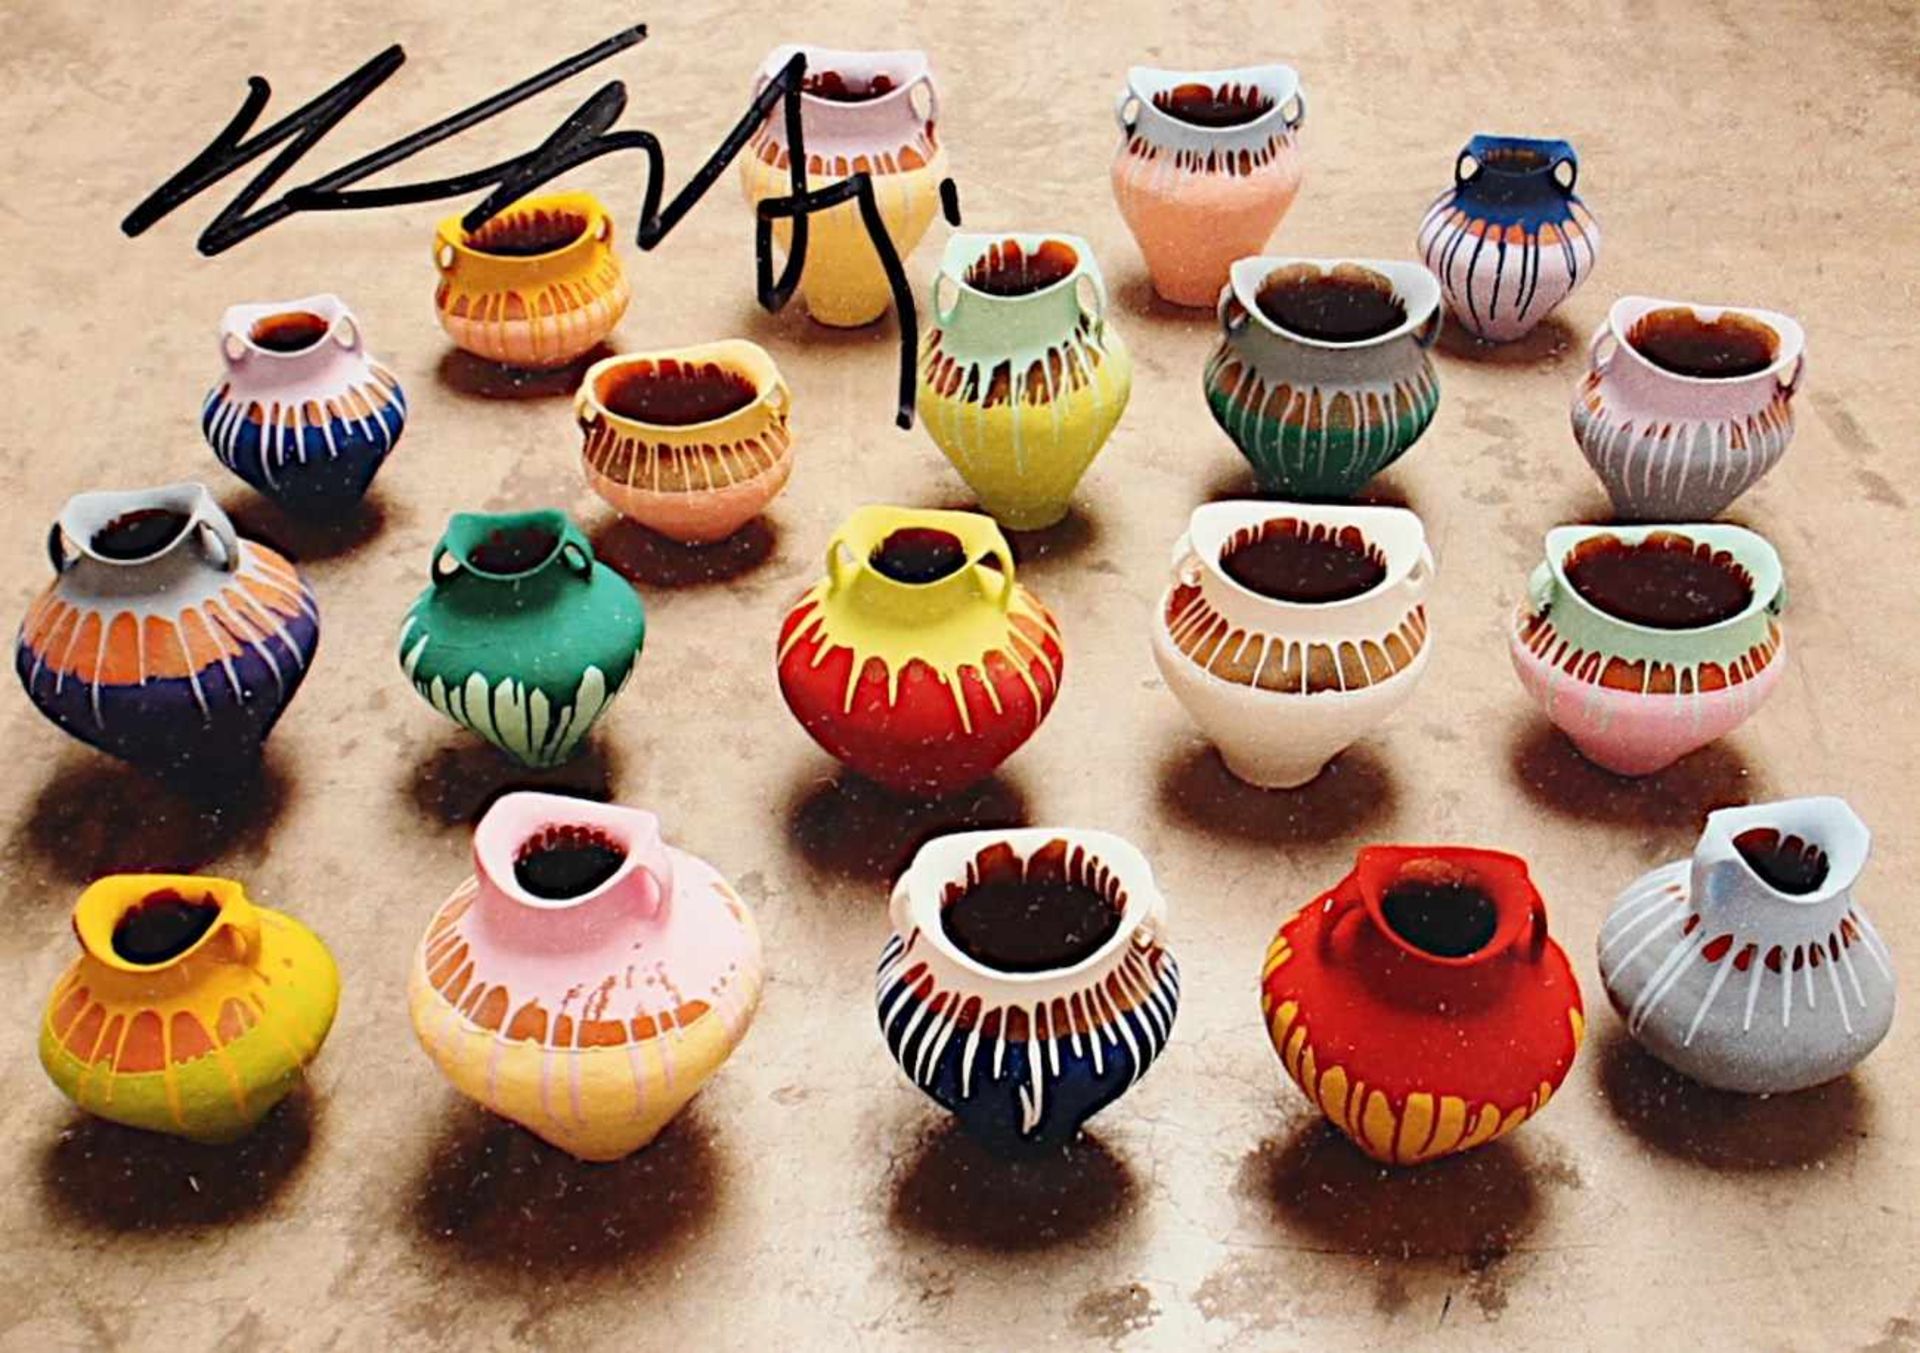 AI WEIWEI, "Colored vases", Multiple (Farboffset, Kunstpostkarte), 10,5 x 15, handsigniert, R.